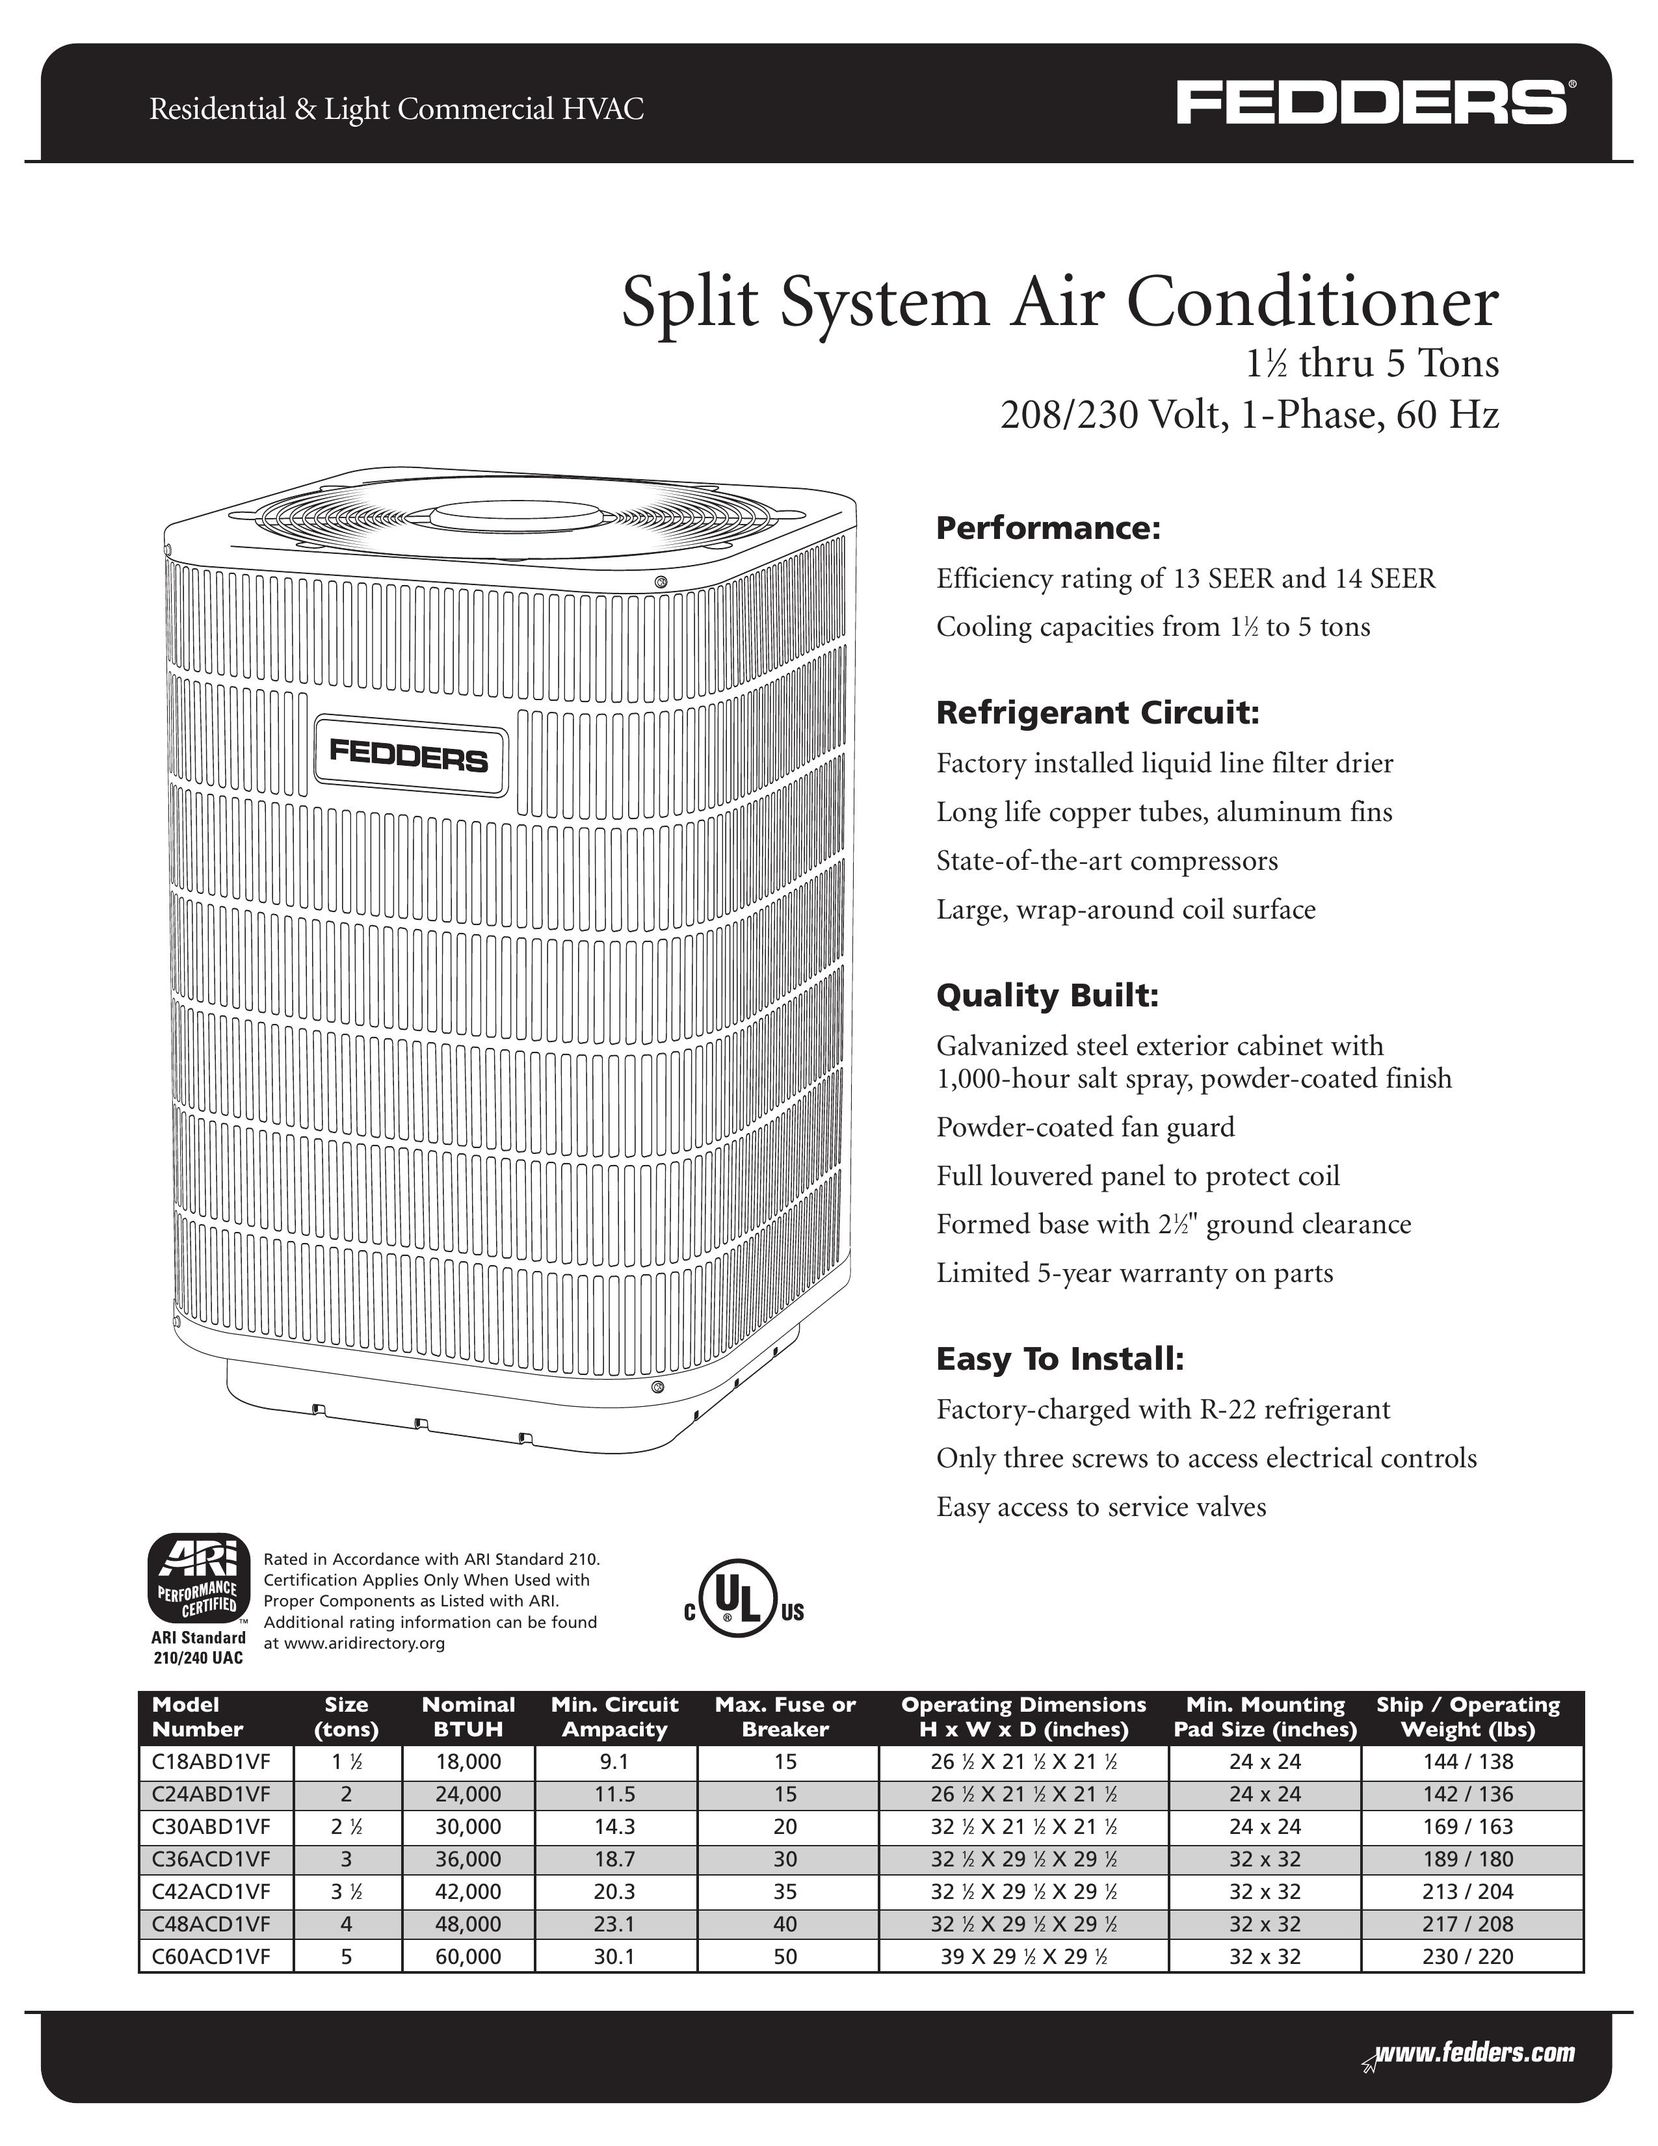 Fedders C30ABD1VF Air Conditioner User Manual